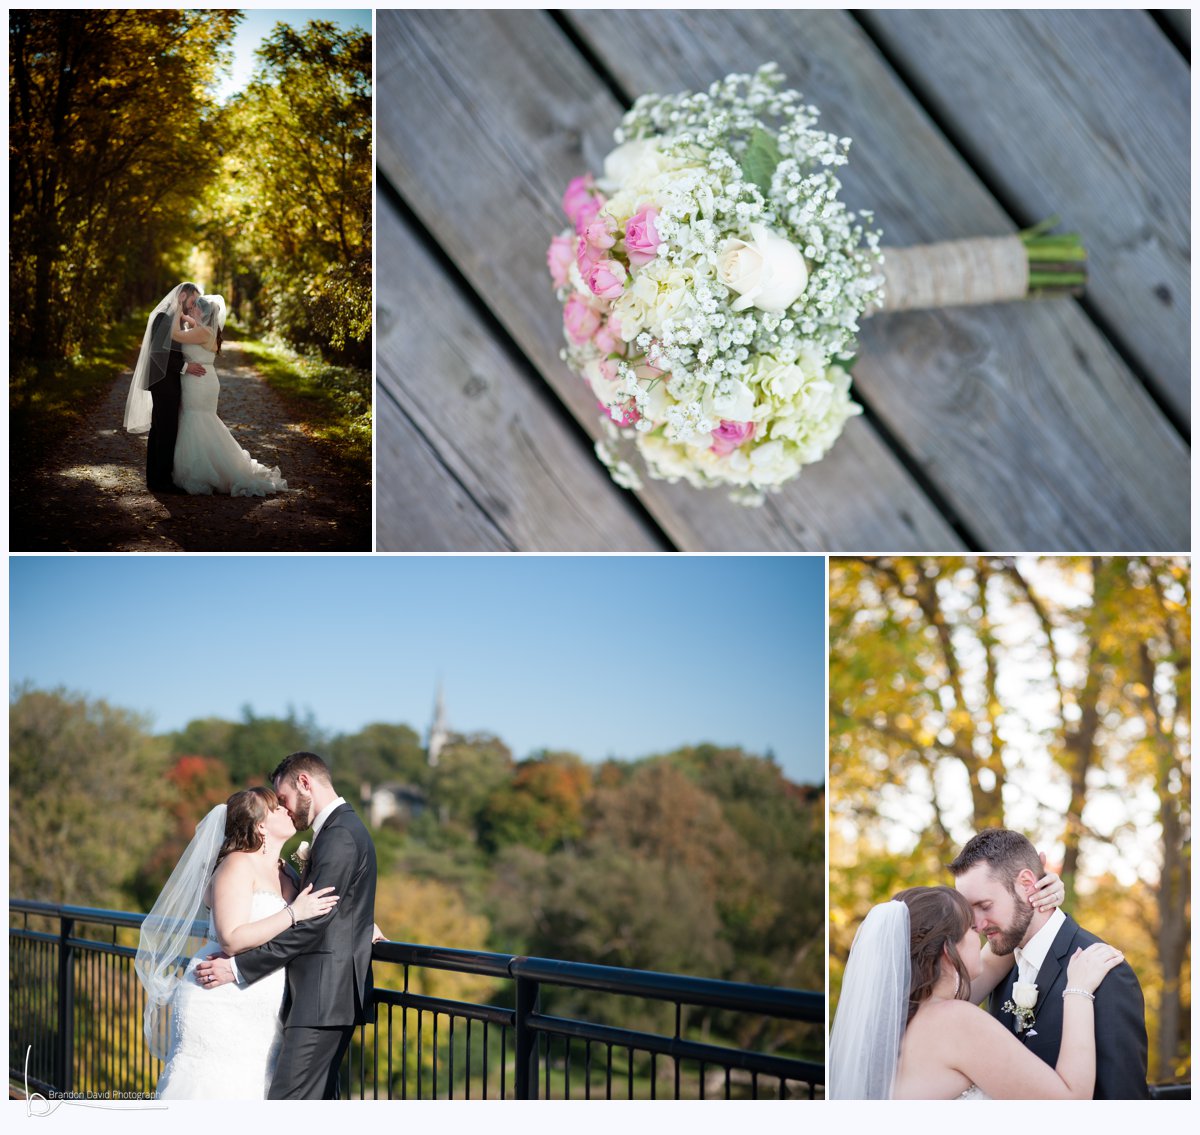 Ingersoll Wedding Photographer - Romantic Bride and Groom images